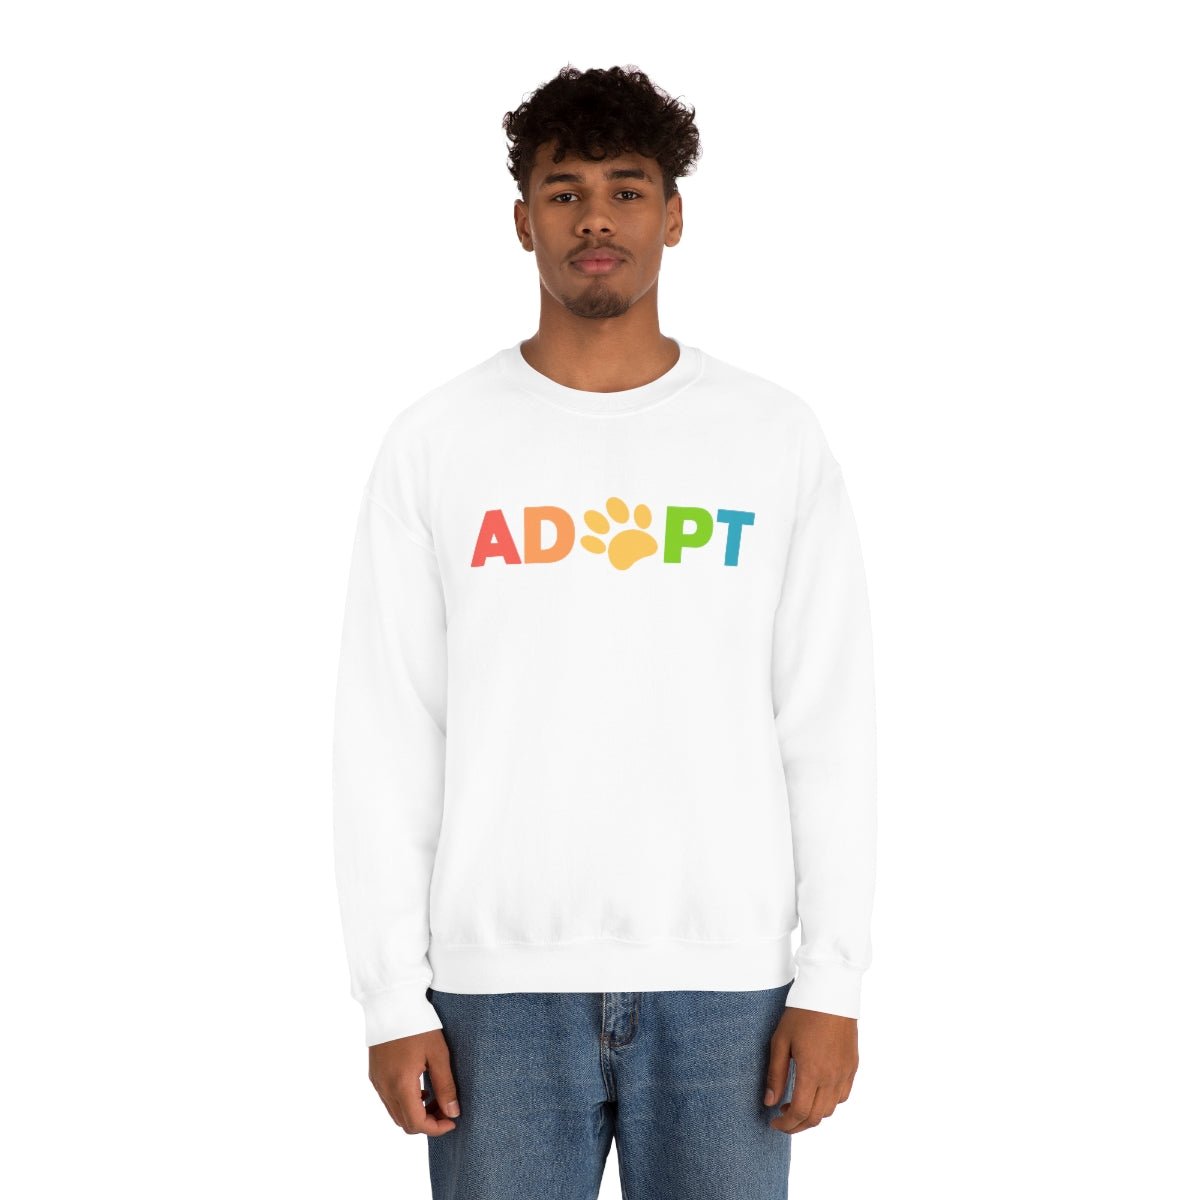 Adopt Rainbow | Crewneck Sweatshirt - Detezi Designs-31555683127410583339